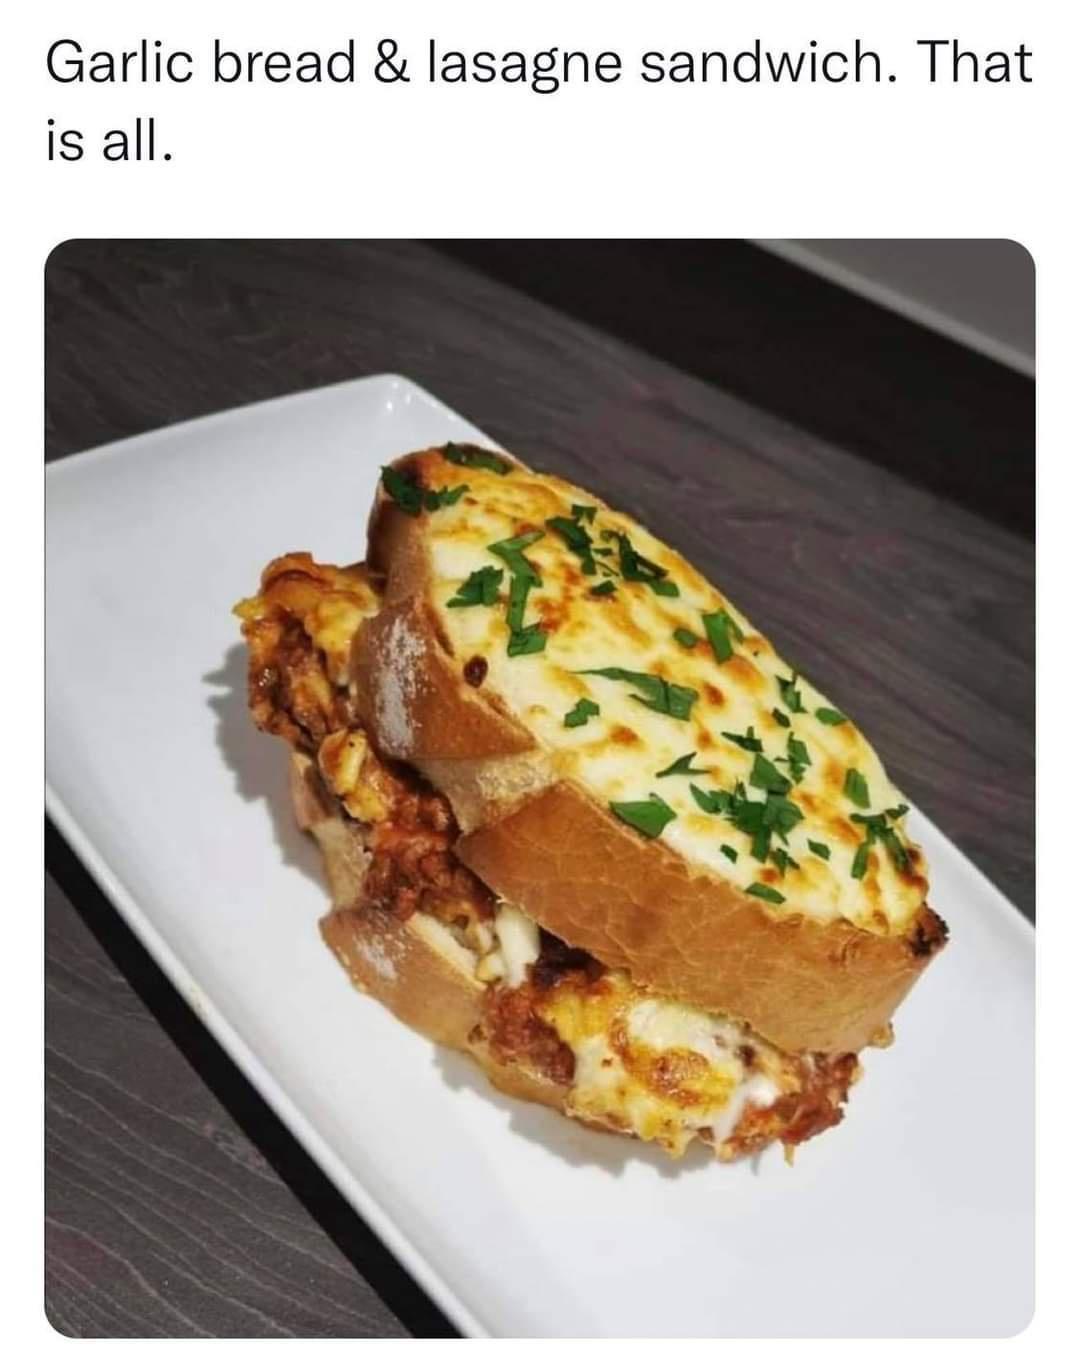 dank memes - garlic bread lasagna sandwich - Garlic bread & lasagne sandwich. That is all.